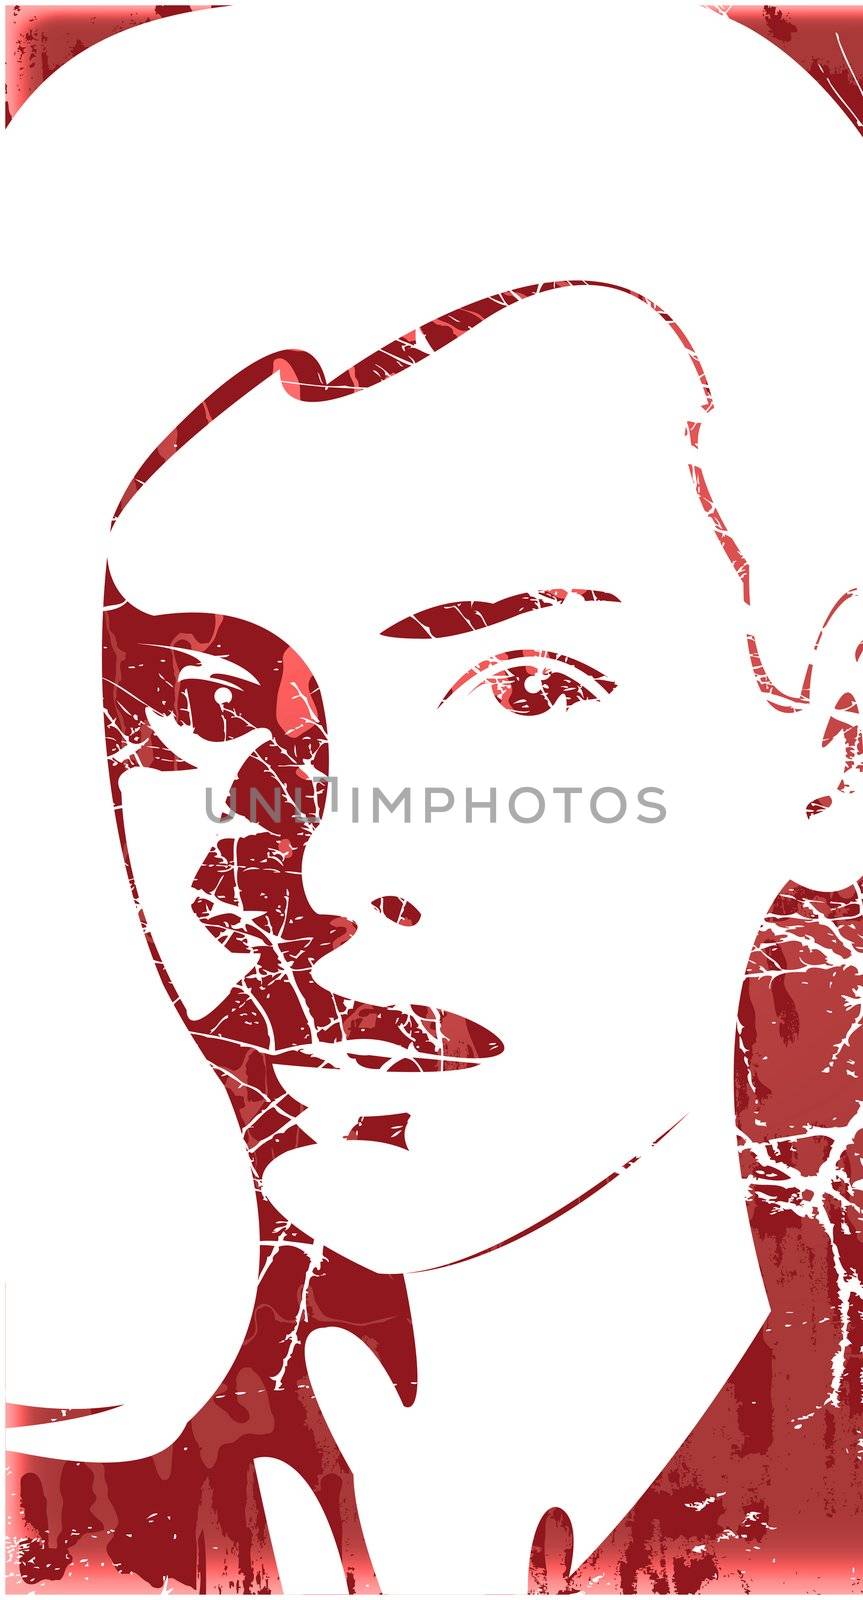 Creative grunge art, stylized portrait of a girl